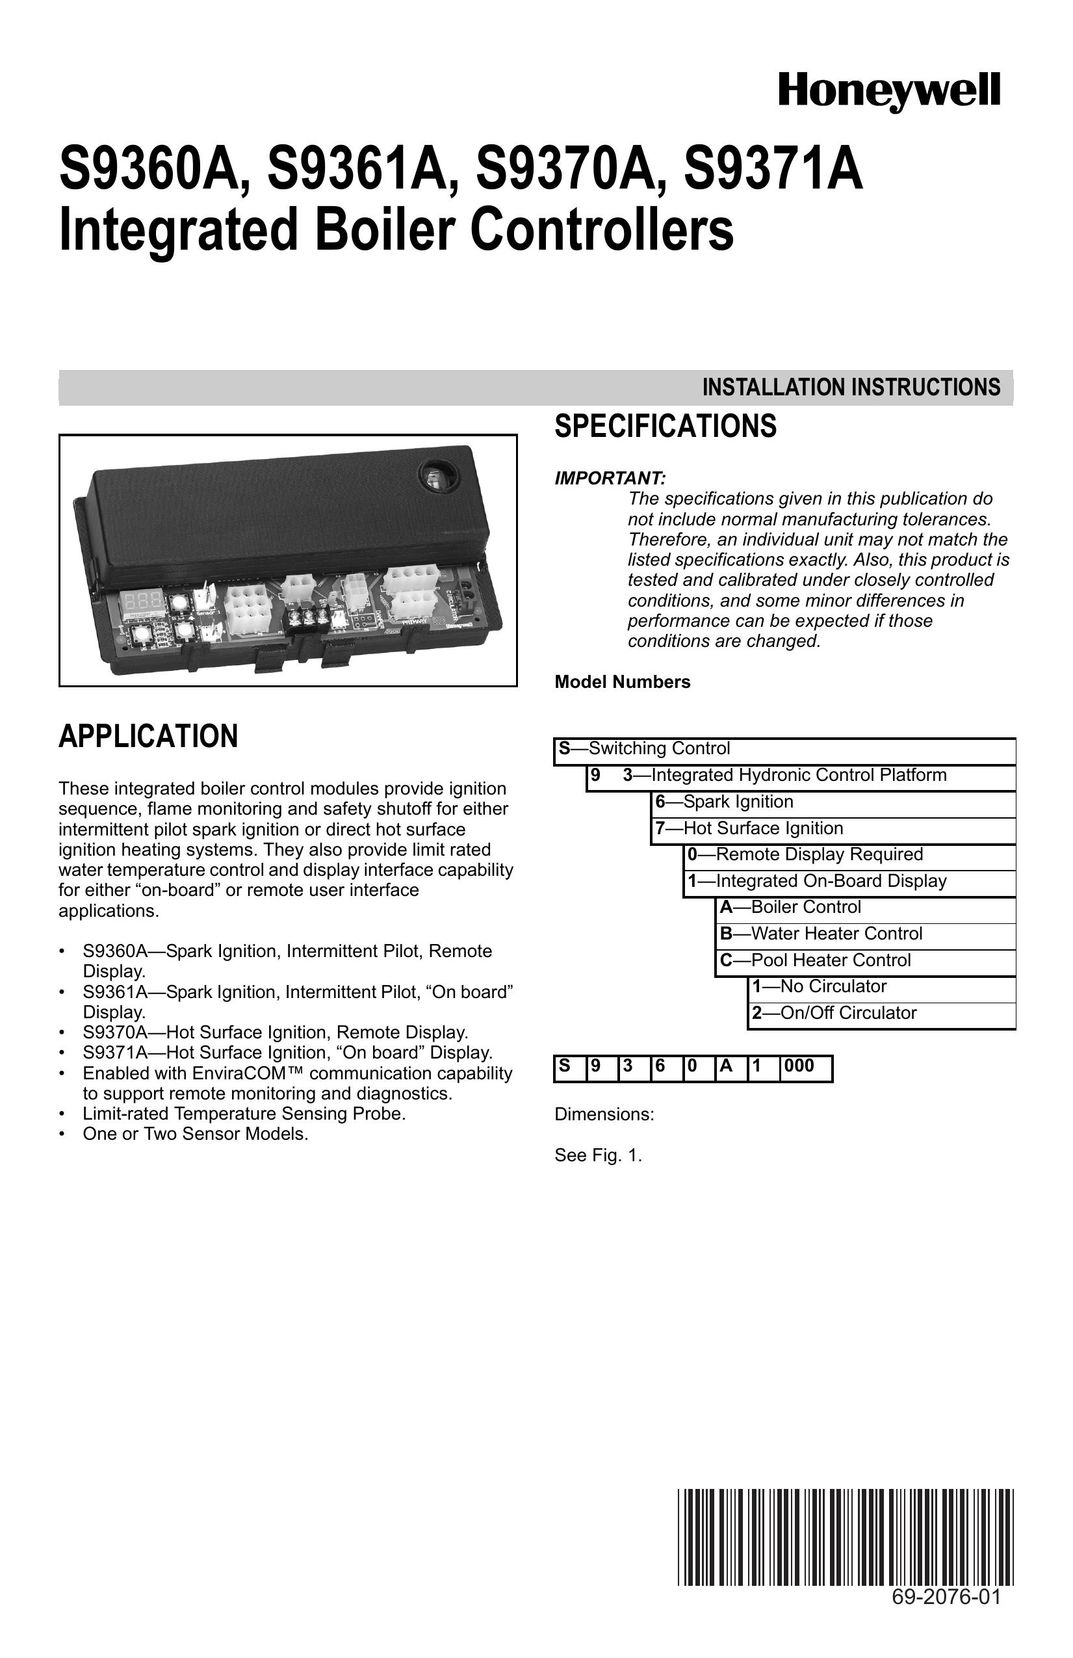 Honeywell S9370A Boiler User Manual